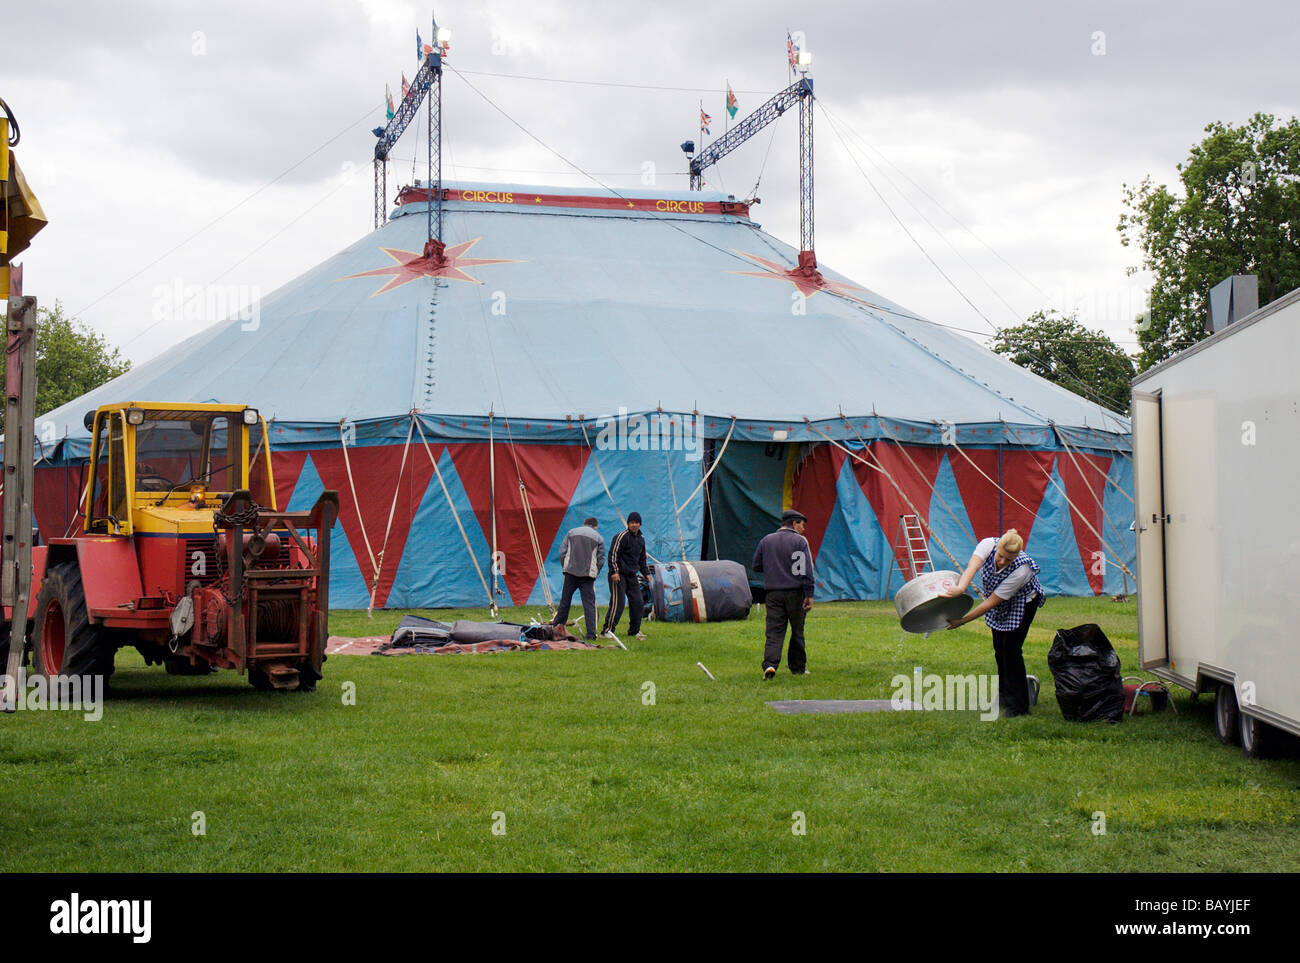 Grand Chapiteau Zelt, Reisen Zirkus in einem Londoner Park, Hackney, England, Großbritannien, UK Stockfoto